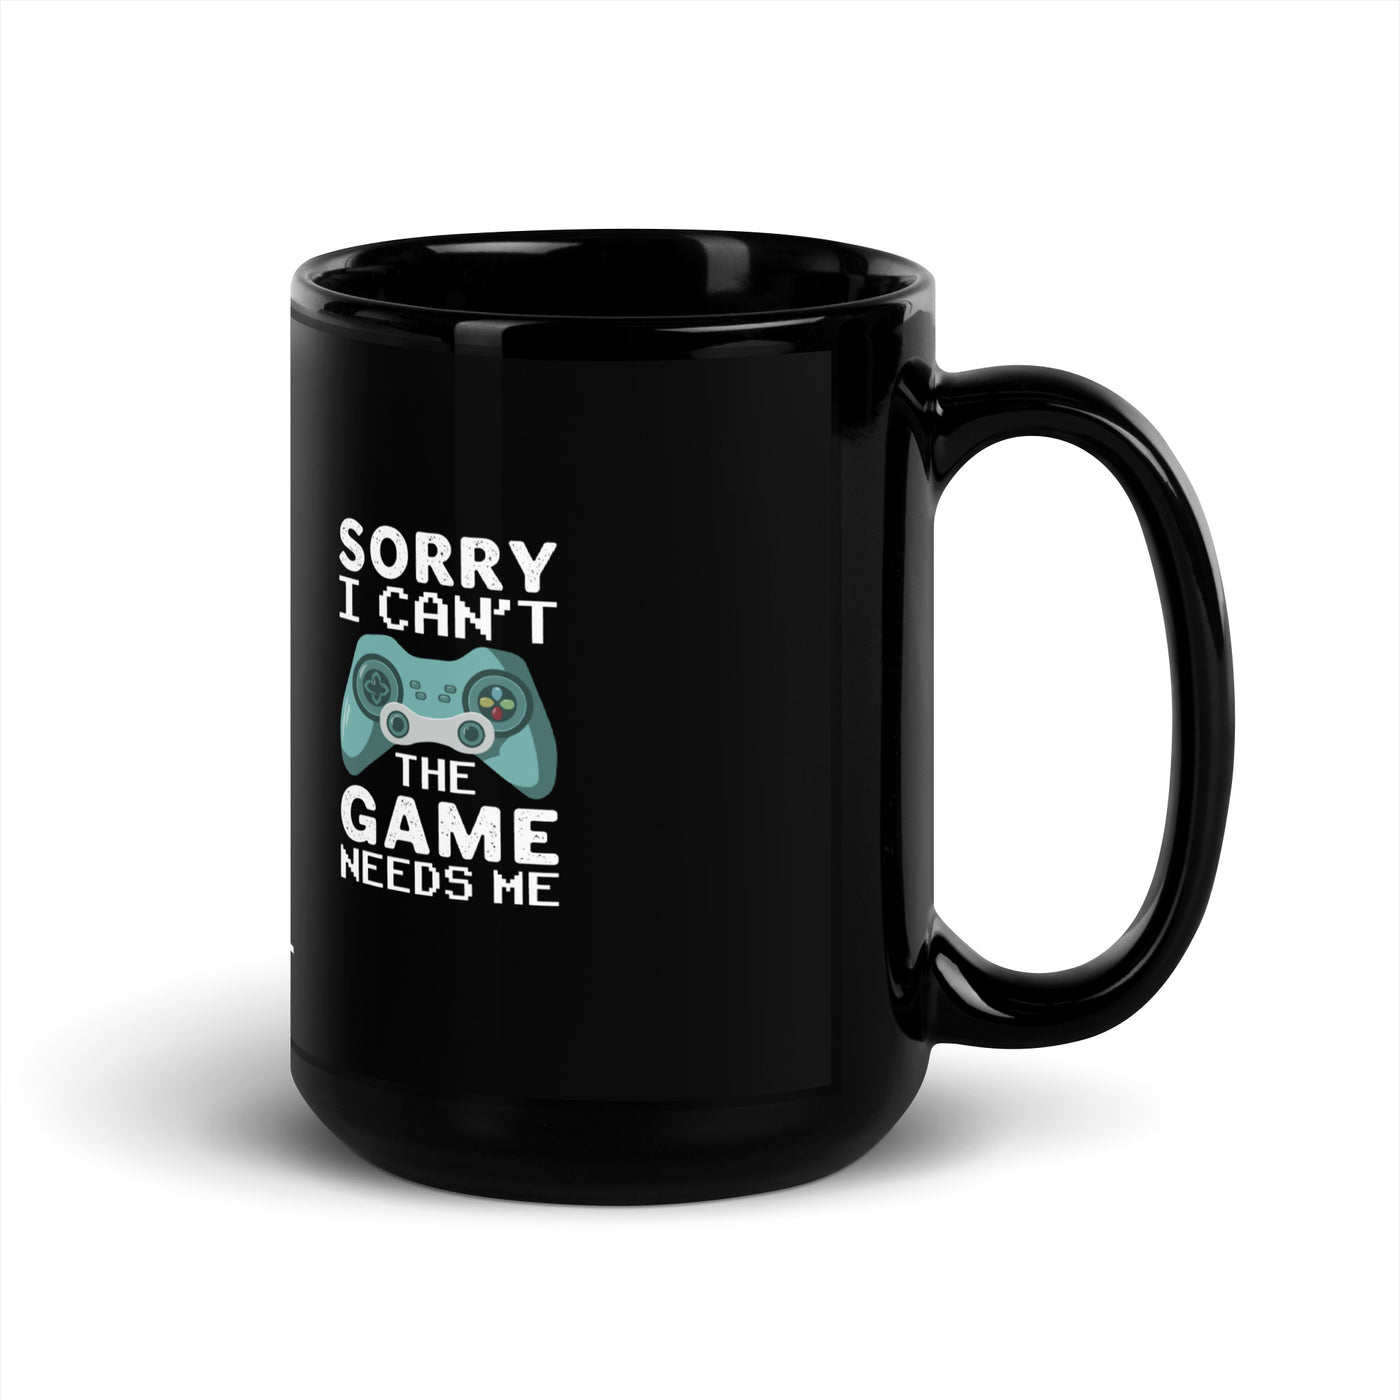 Sorry! I can't, The Game needs me - Black Glossy Mug